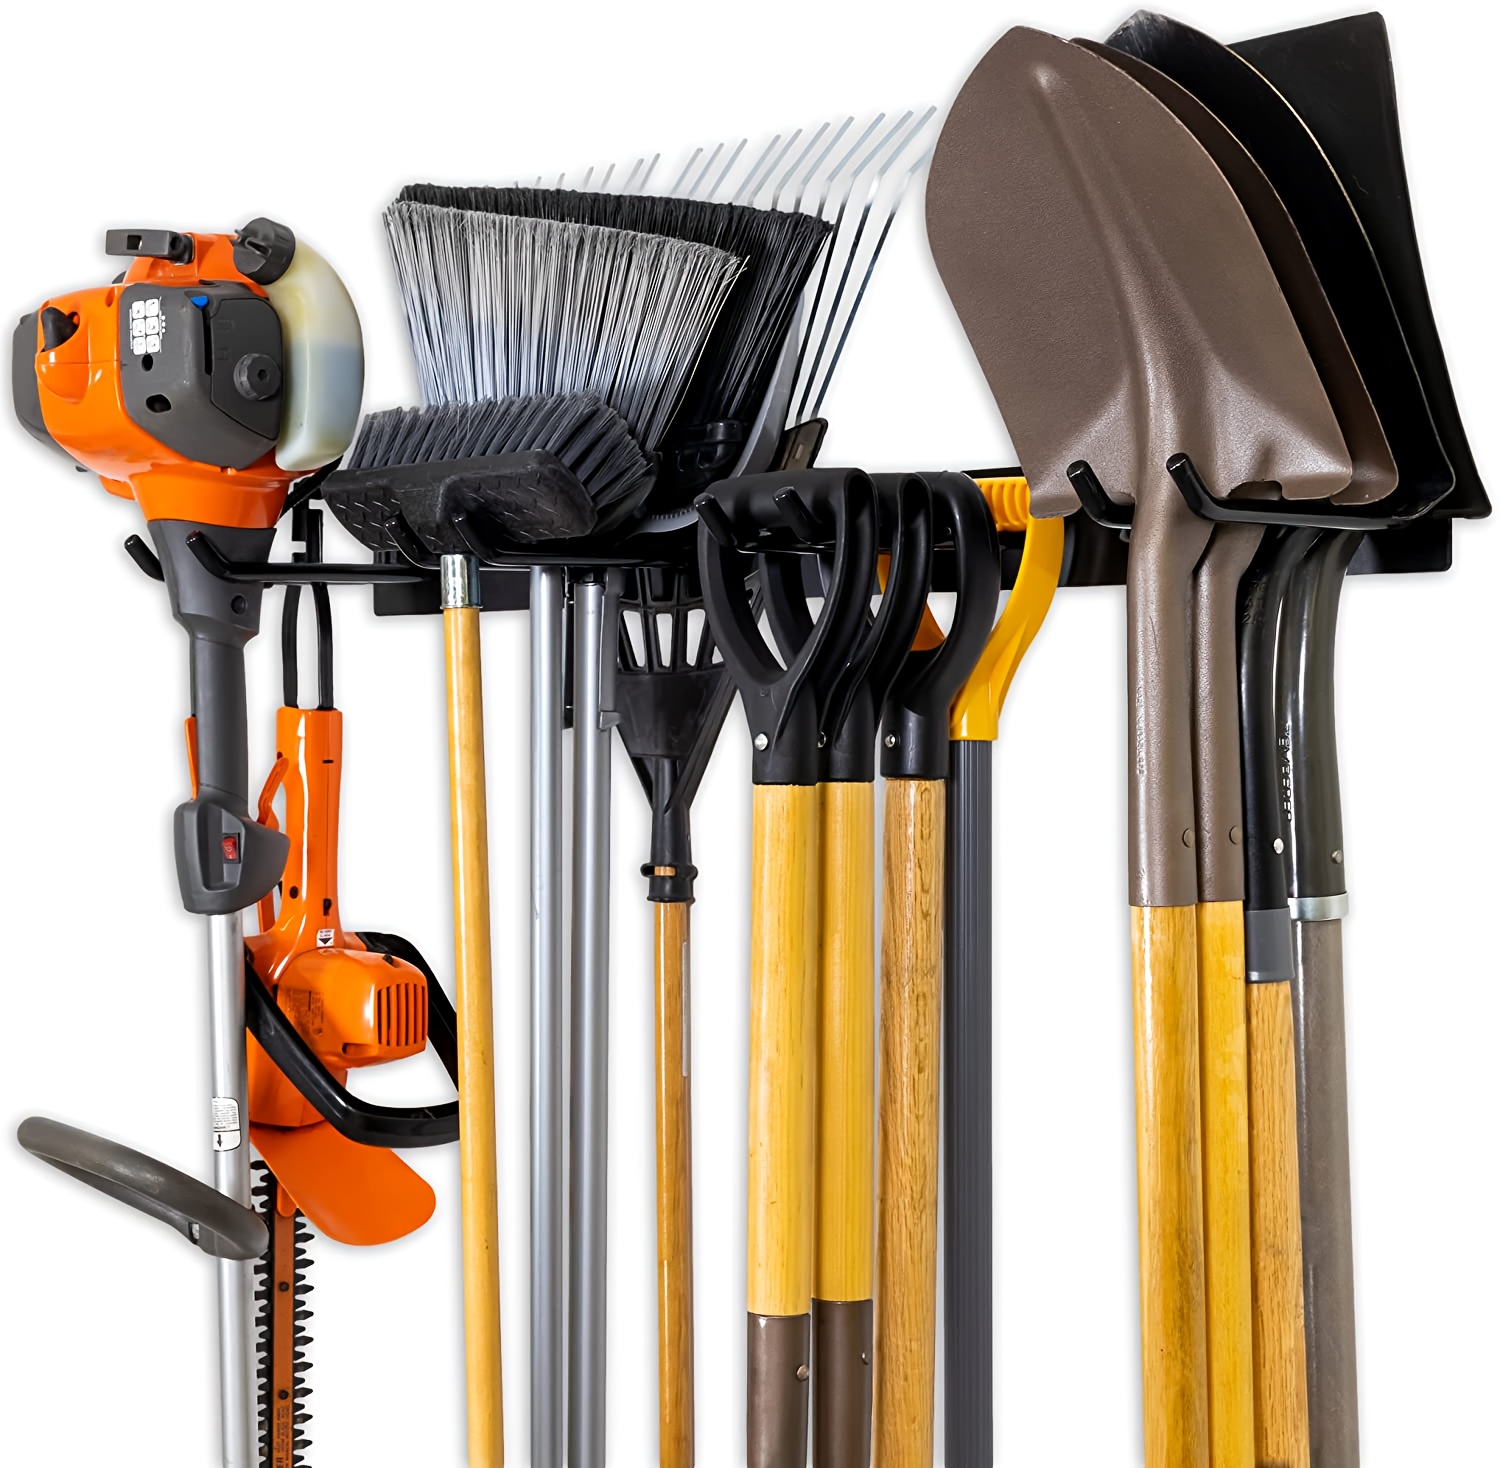 Mottez B837V Porte outils de jardin  Outils de jardin, Rangement outils,  Rangement outils jardin